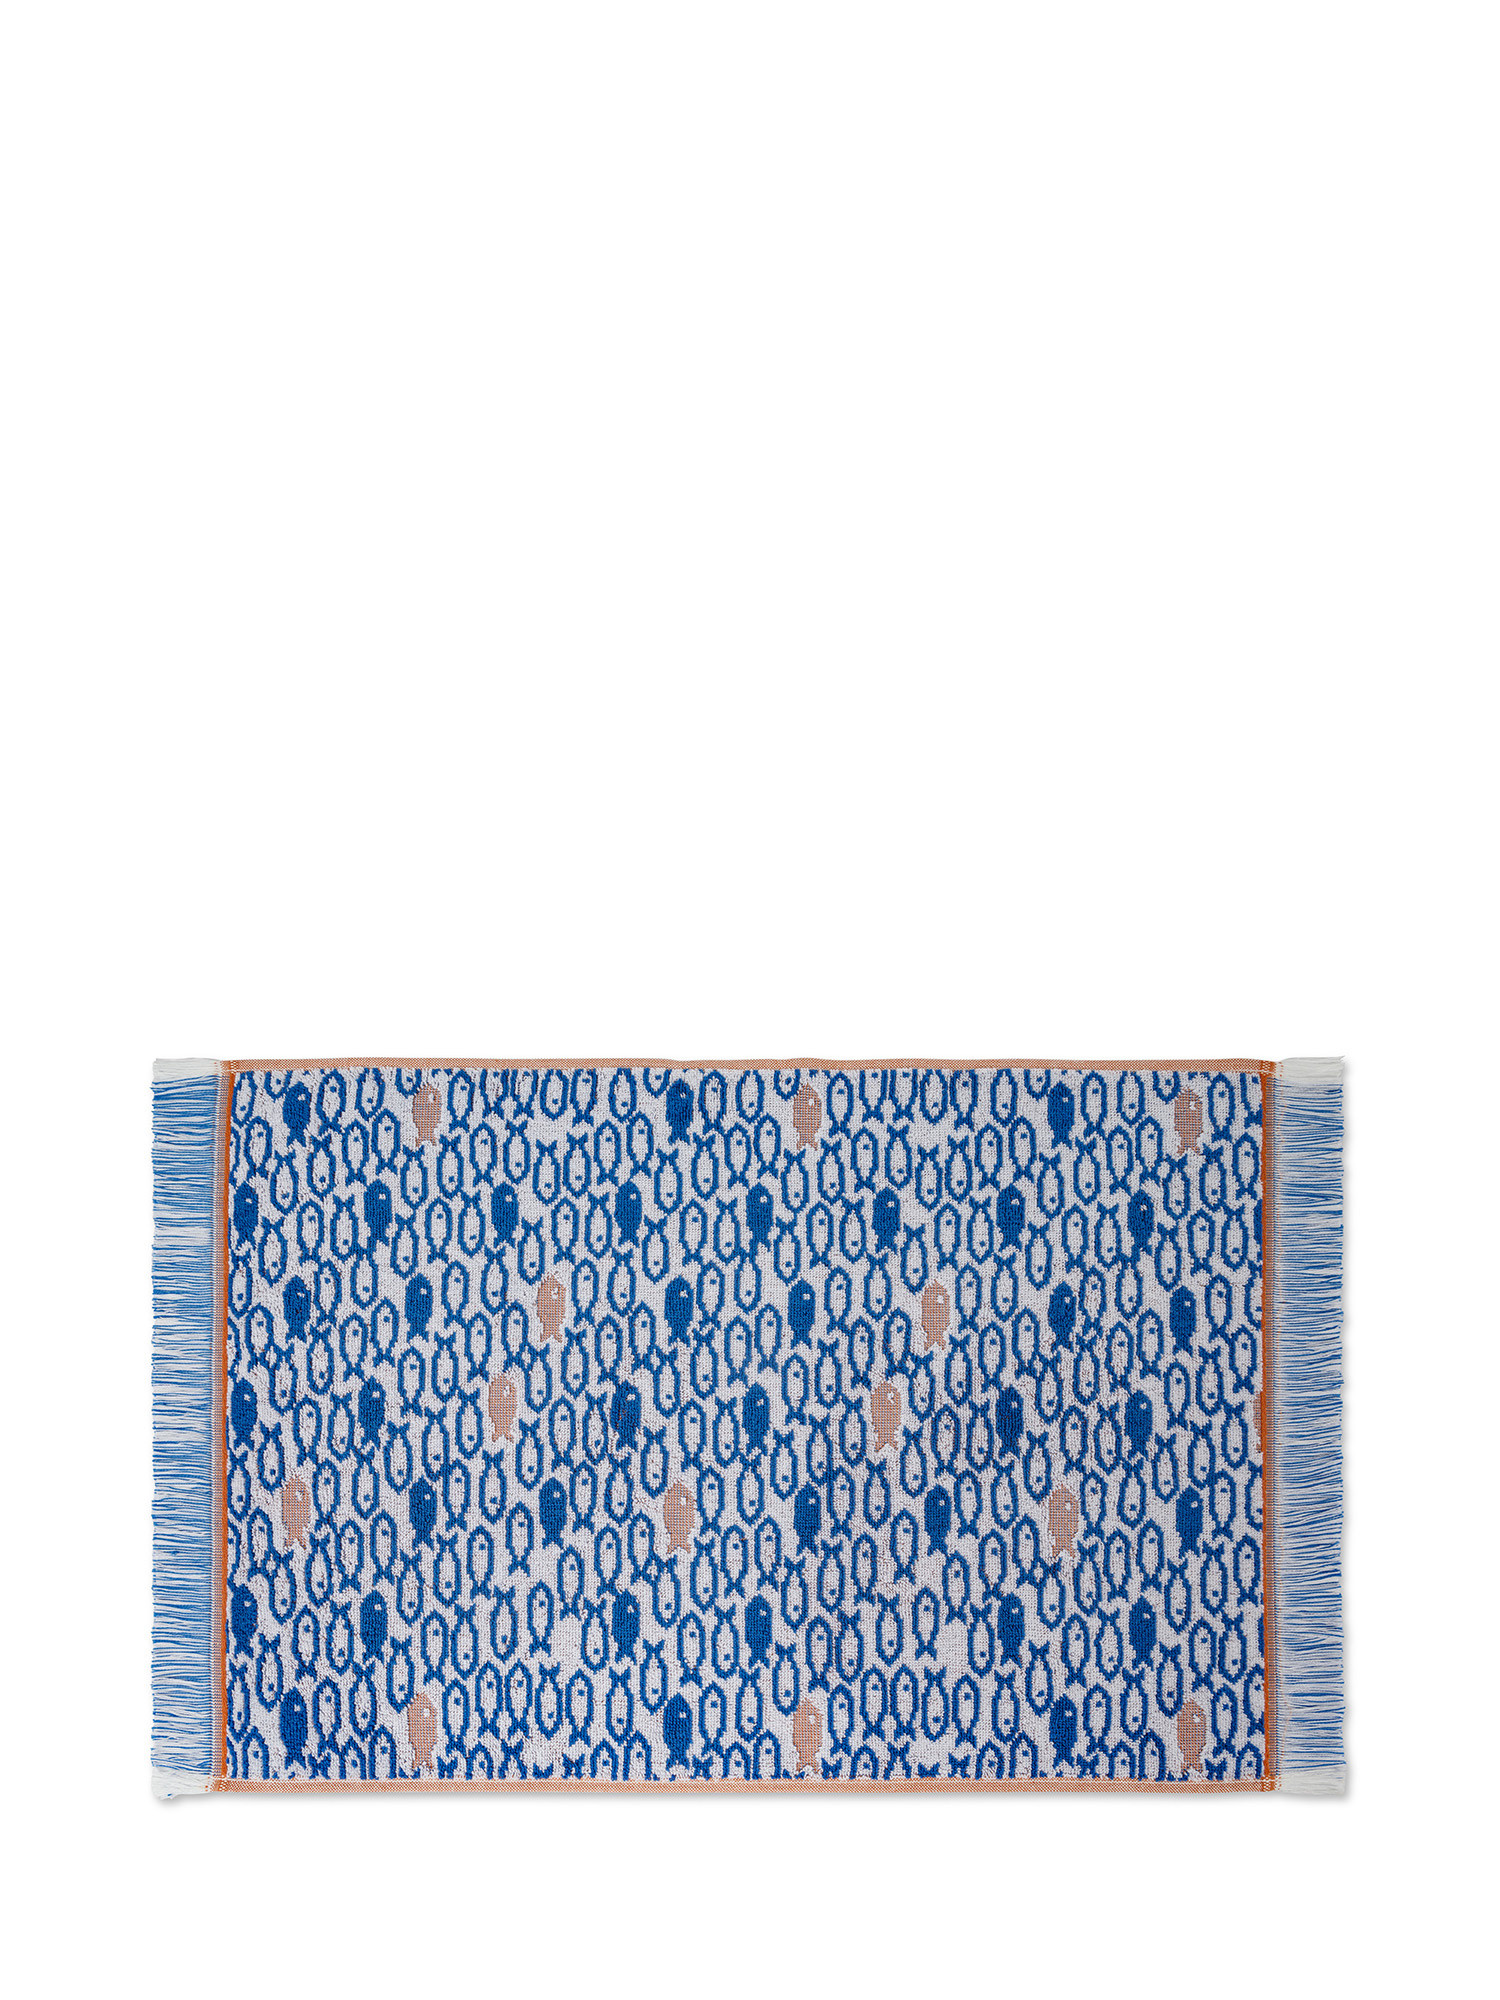 Asciugamano spugna di cotone motivo pesci, Blu, large image number 1